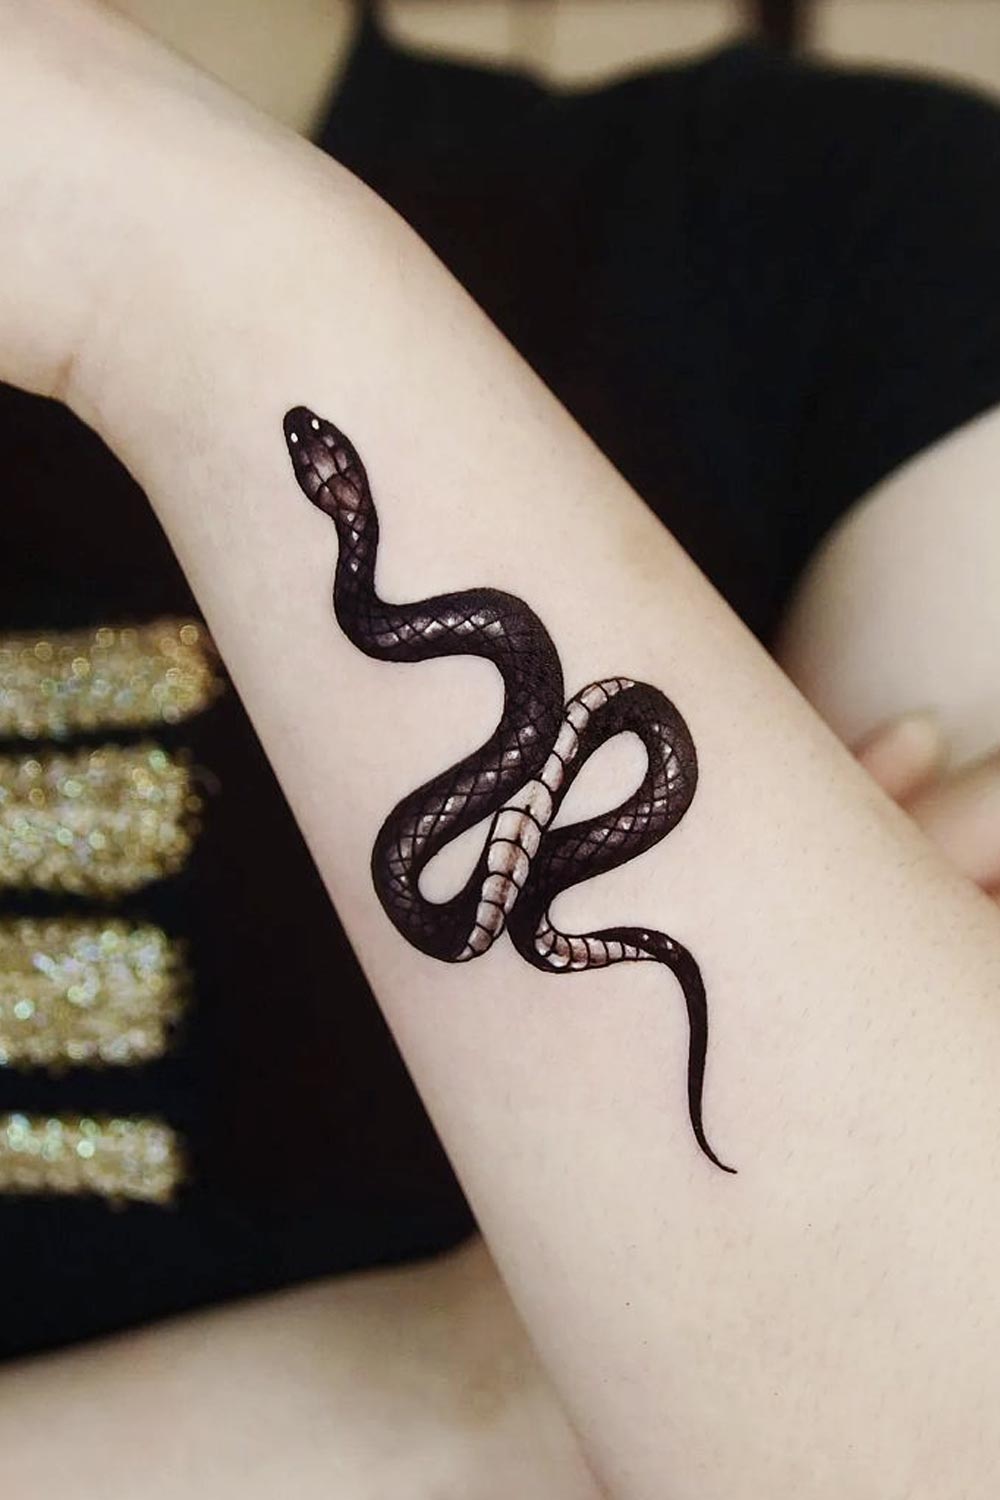 Black Snake Tattoo Design